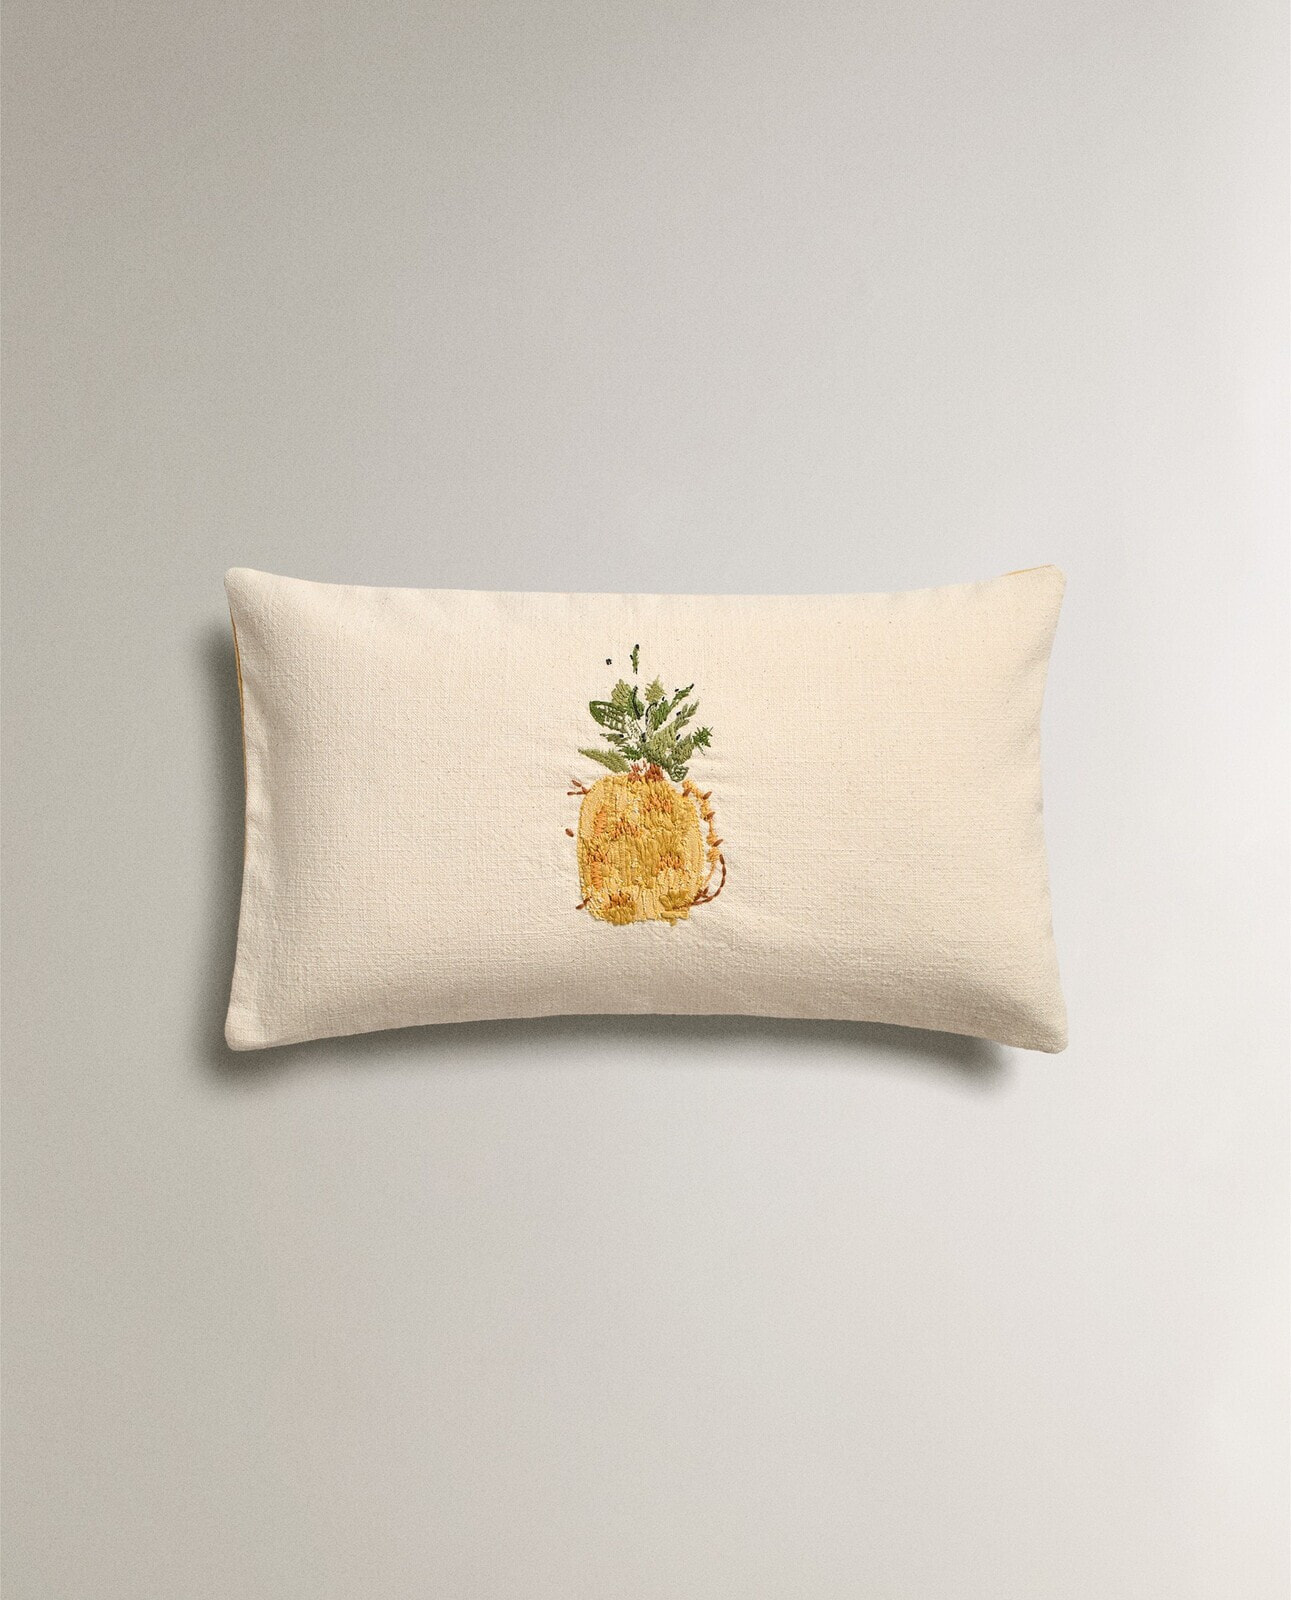 Pineapple cushion cover